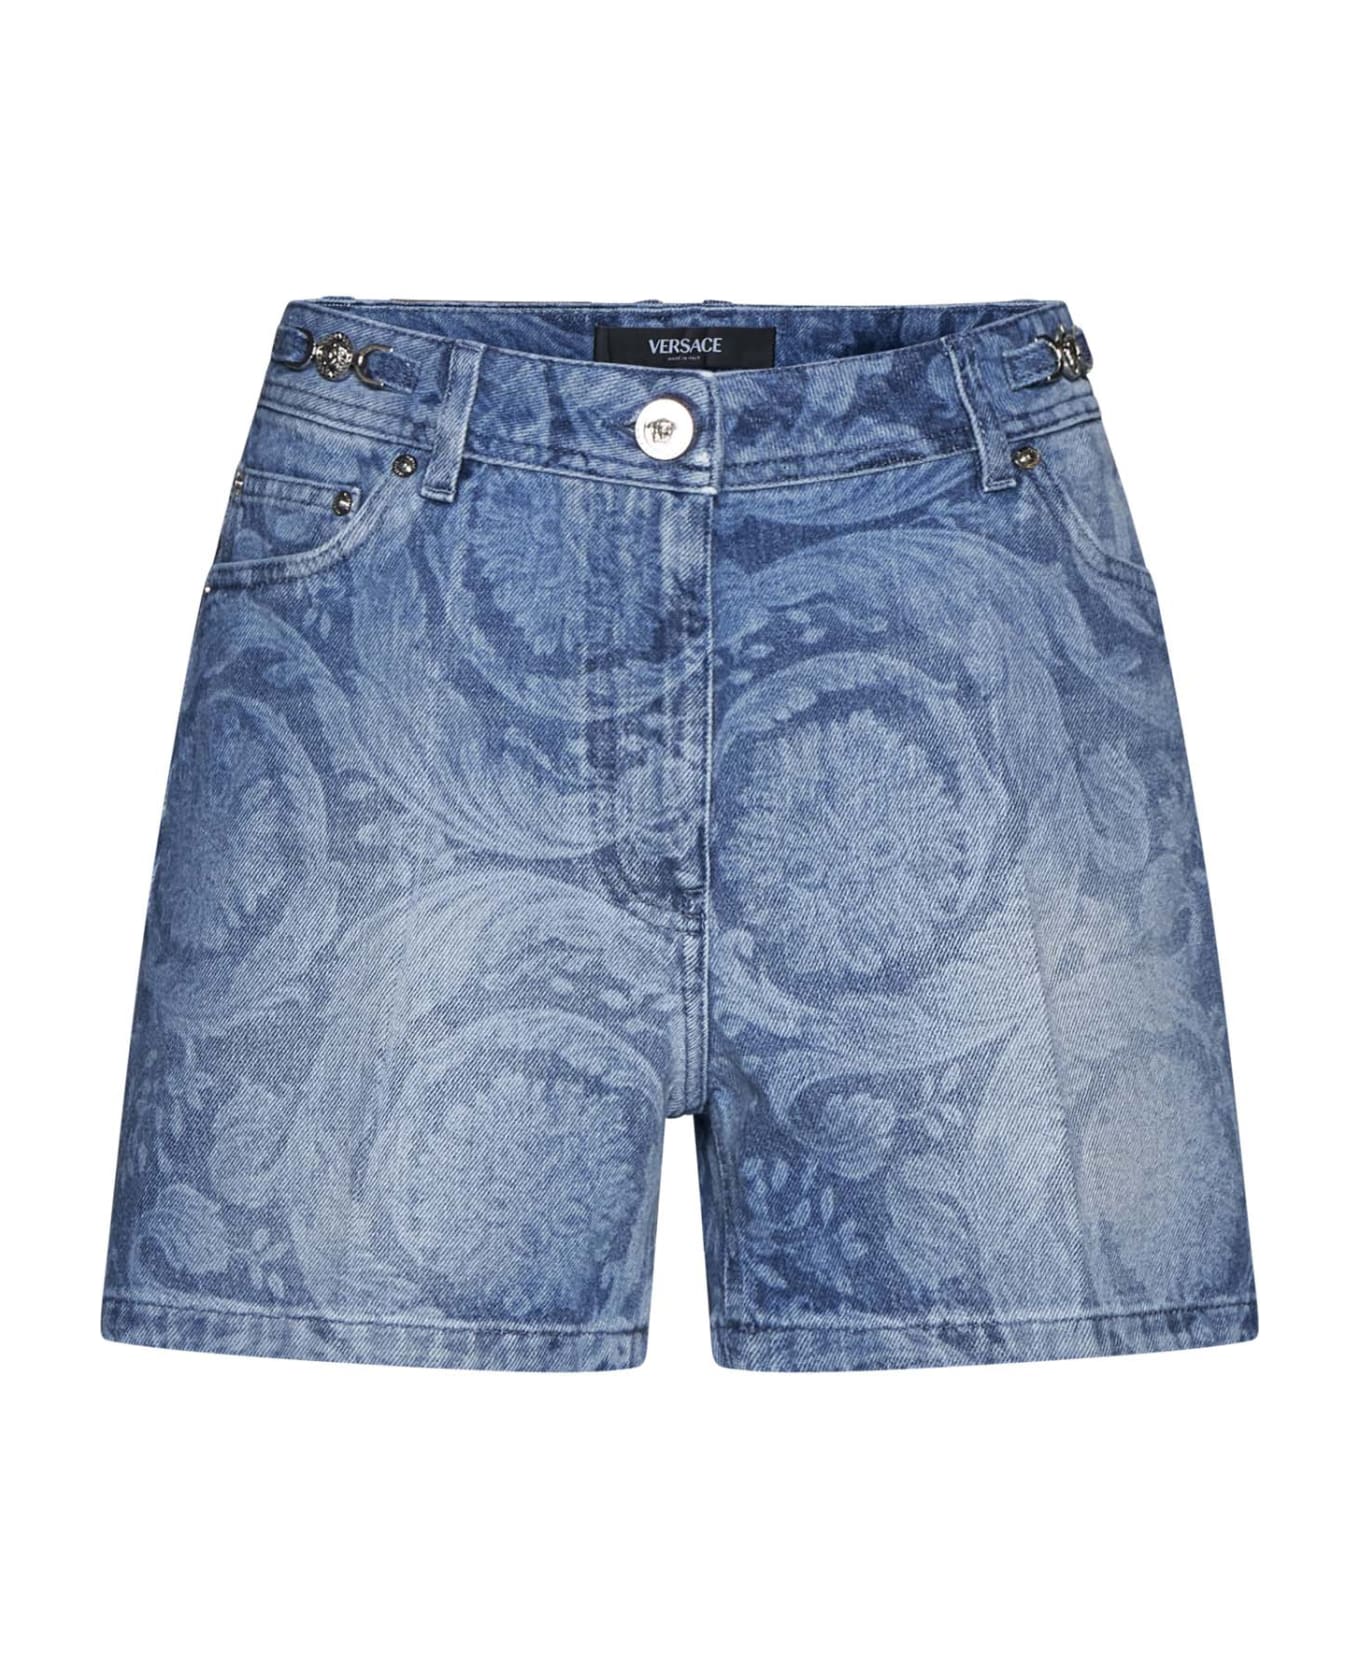 Versace Slim Fit Denim Shorts - Medium blue ショートパンツ